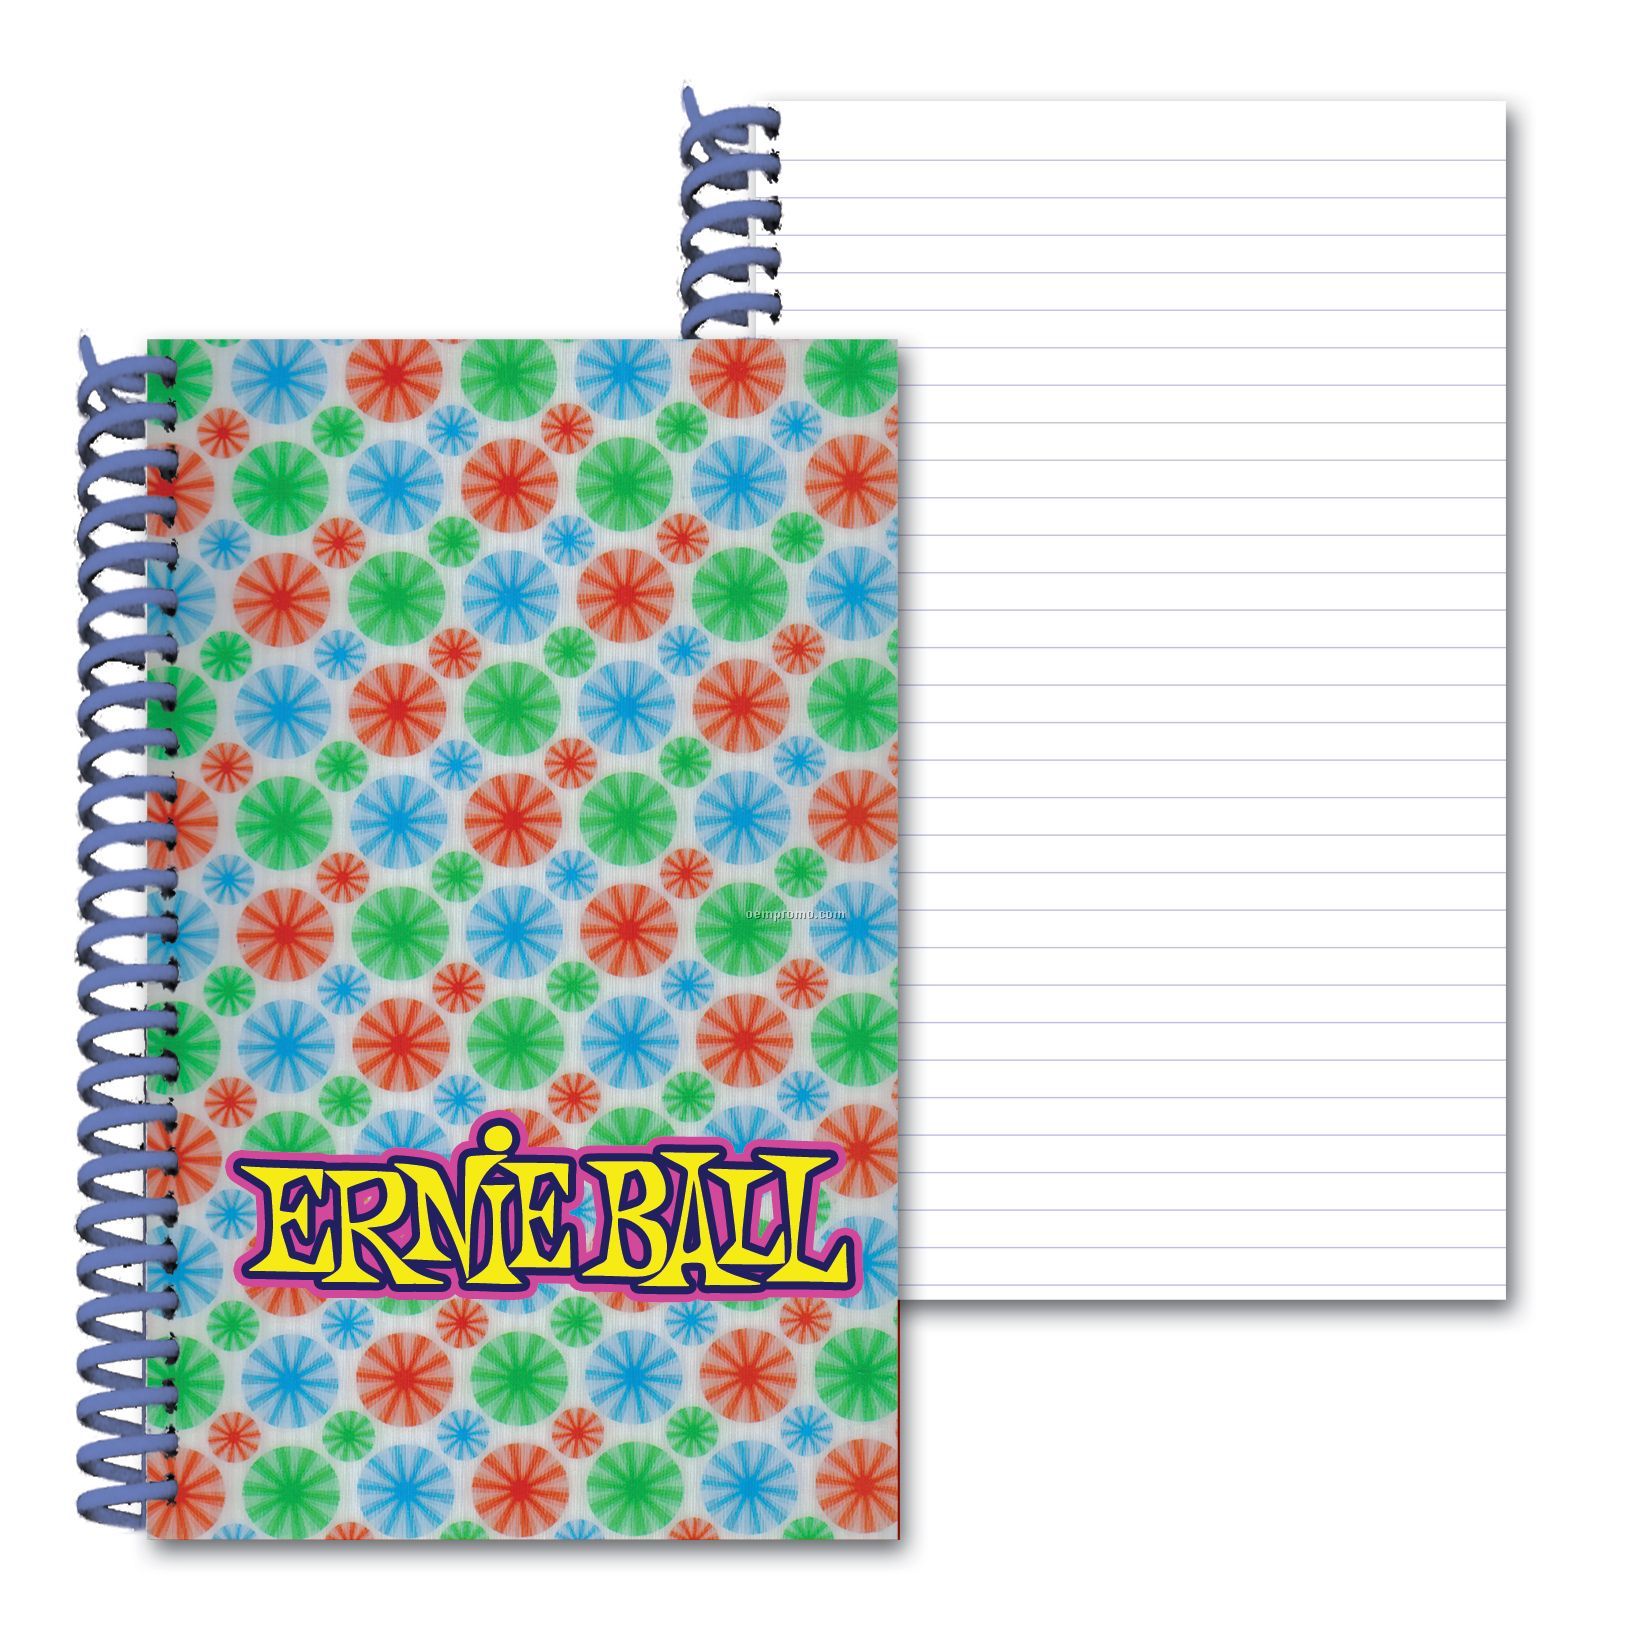 3d Lenticular Notebook Stock/Multi-colored Spinning Circles (Custom)